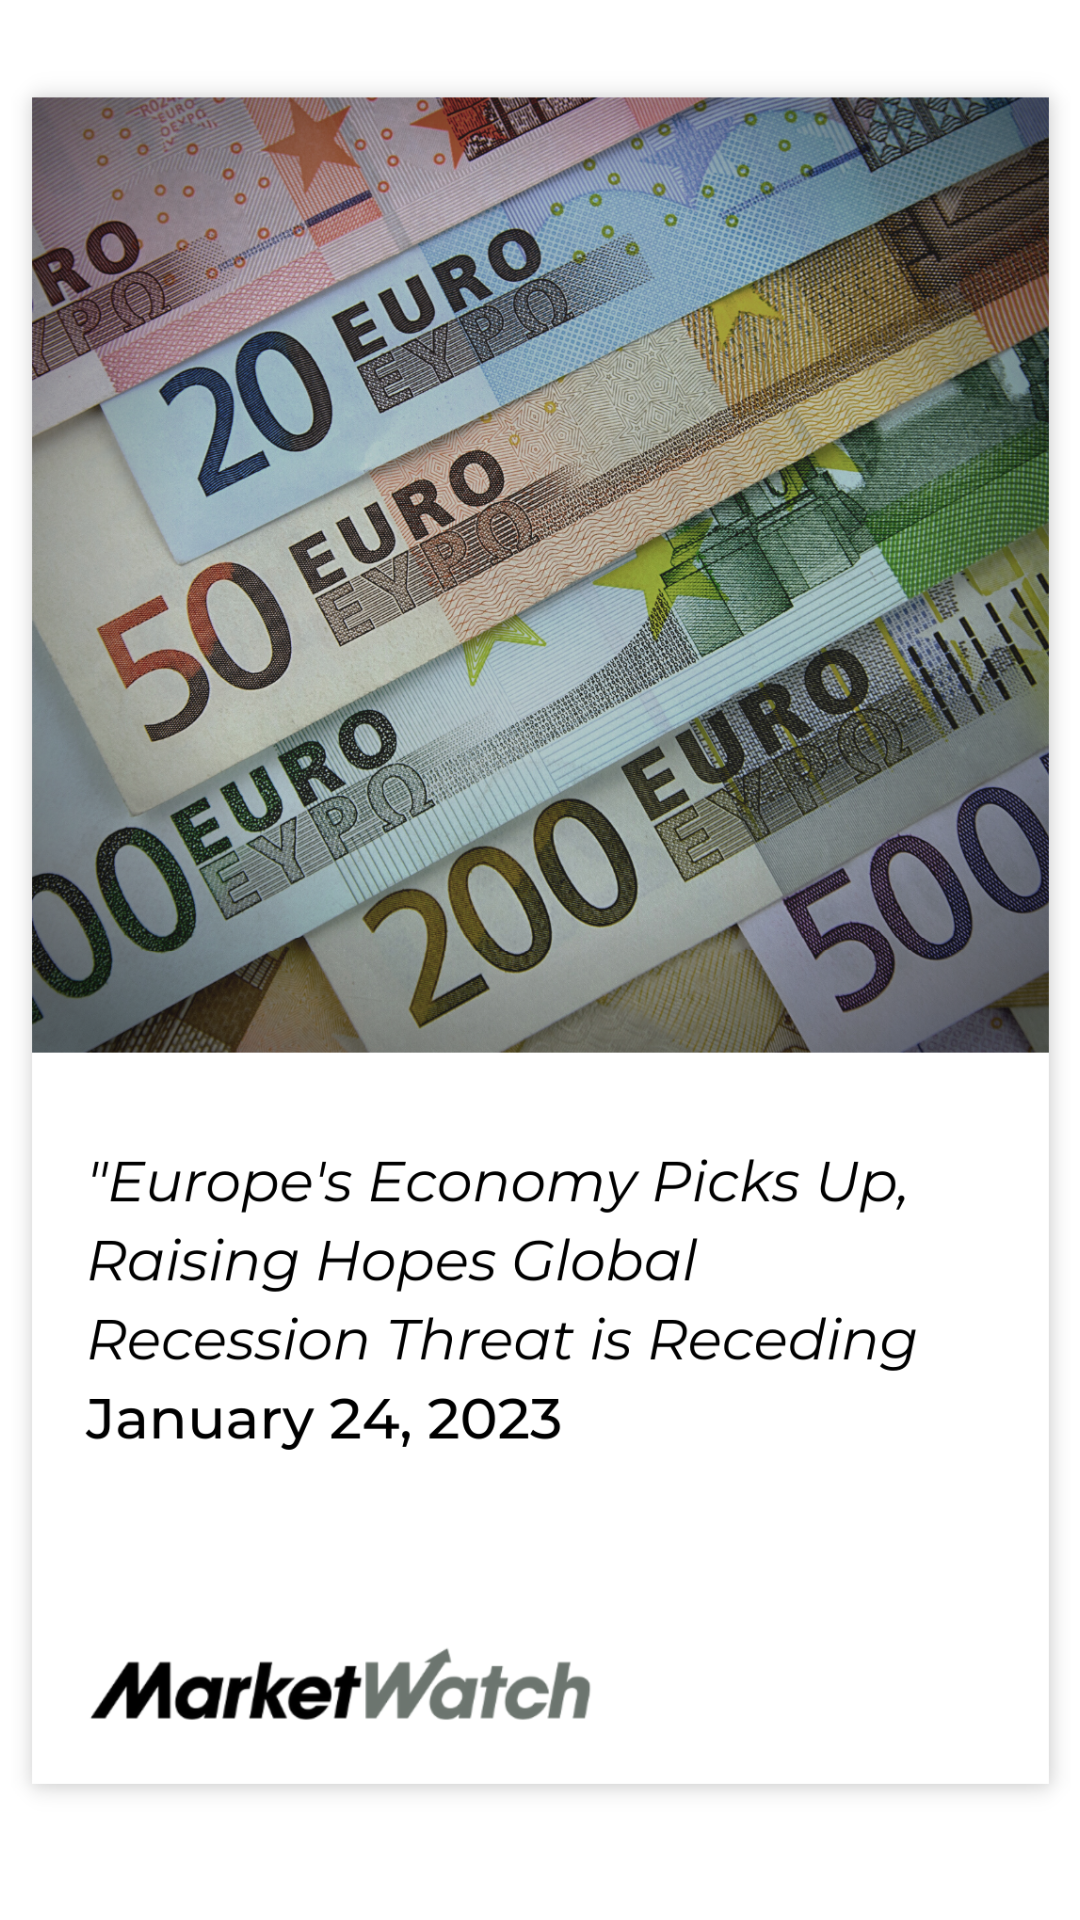 "Europe's Economy Picks Up, Raising Hopes Global Recession Threat is Receding"